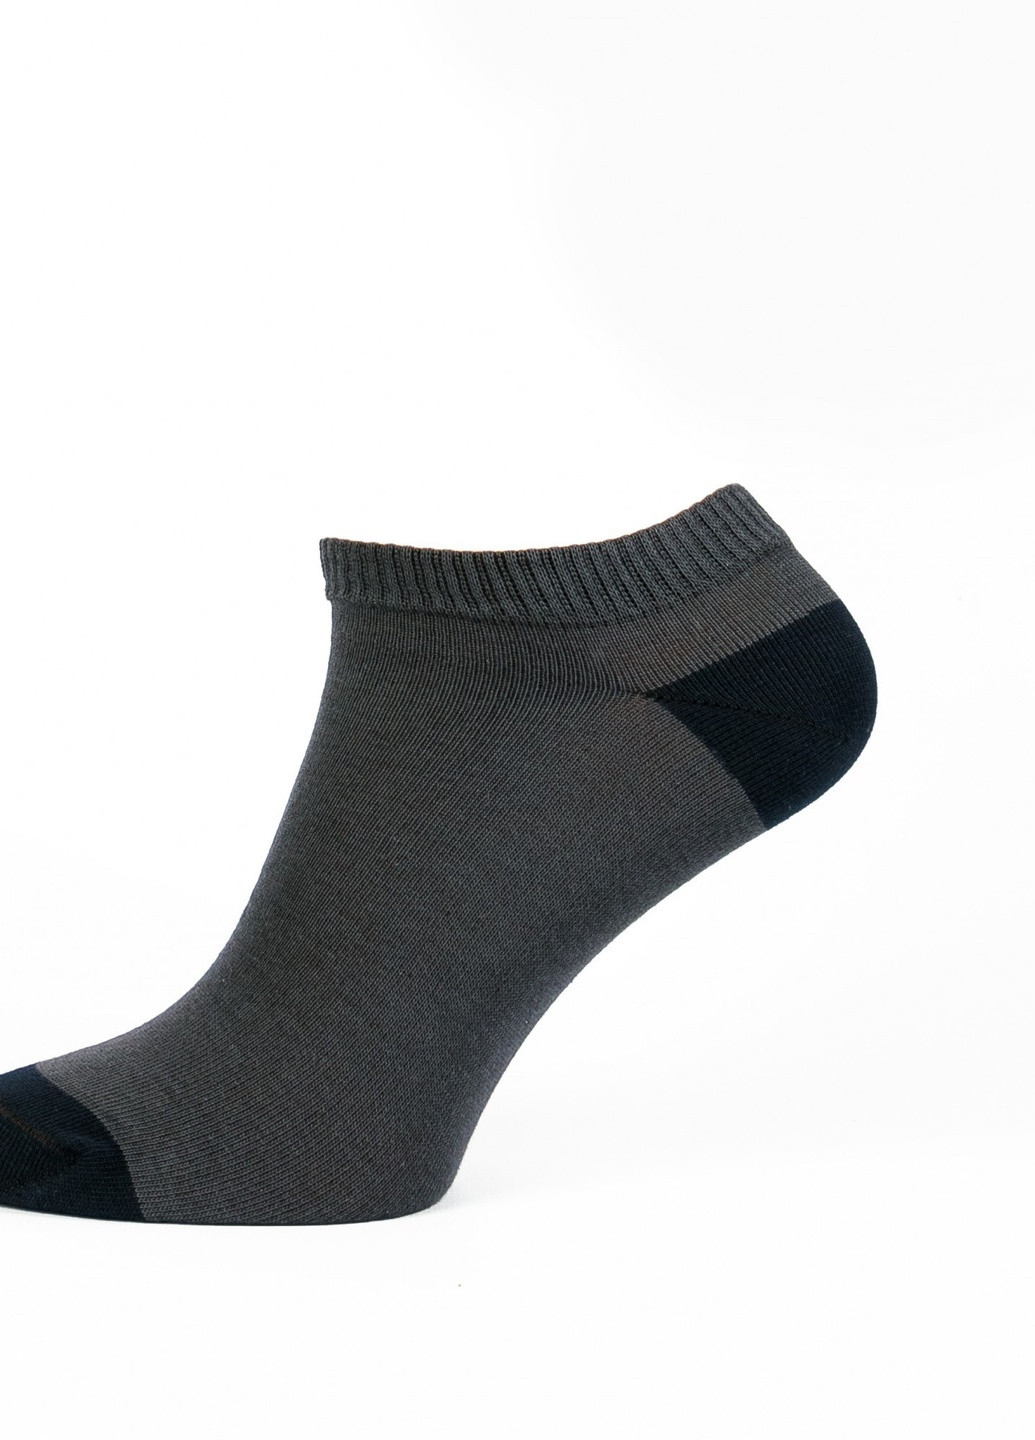 Шкарпетки чоловічі ТМ "Нова пара" 471 НОВА ПАРА укорочена висота (257108327)